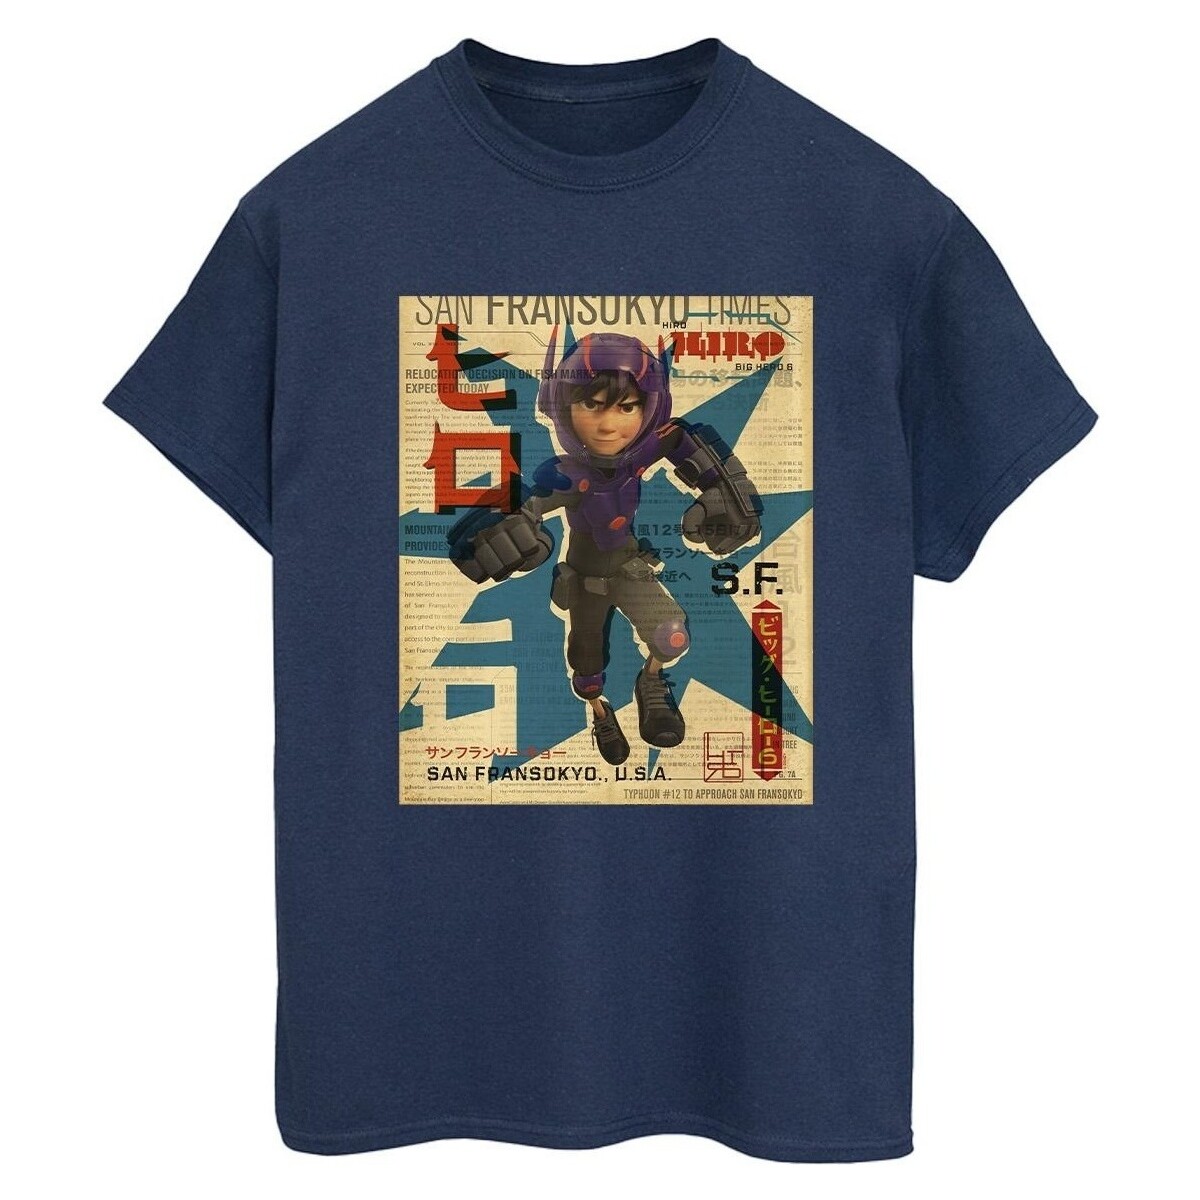 Vêtements Femme T-shirts manches longues Disney Big Hero 6 Baymax Hiro Newspaper Bleu